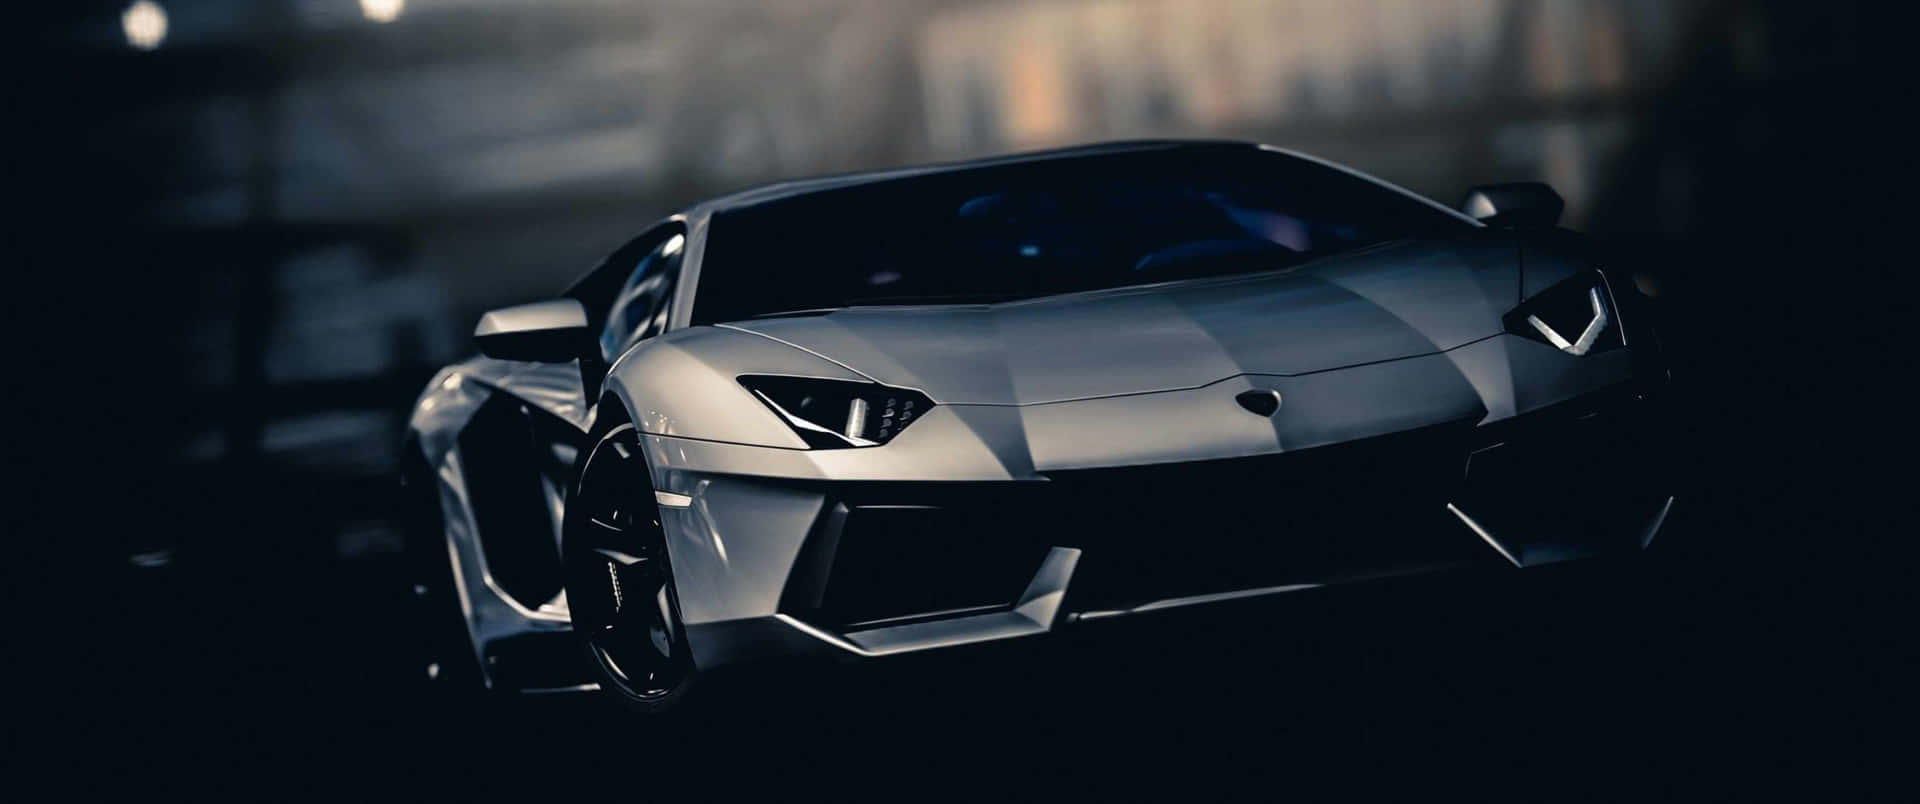 "Feel the power of the Lamborghini"